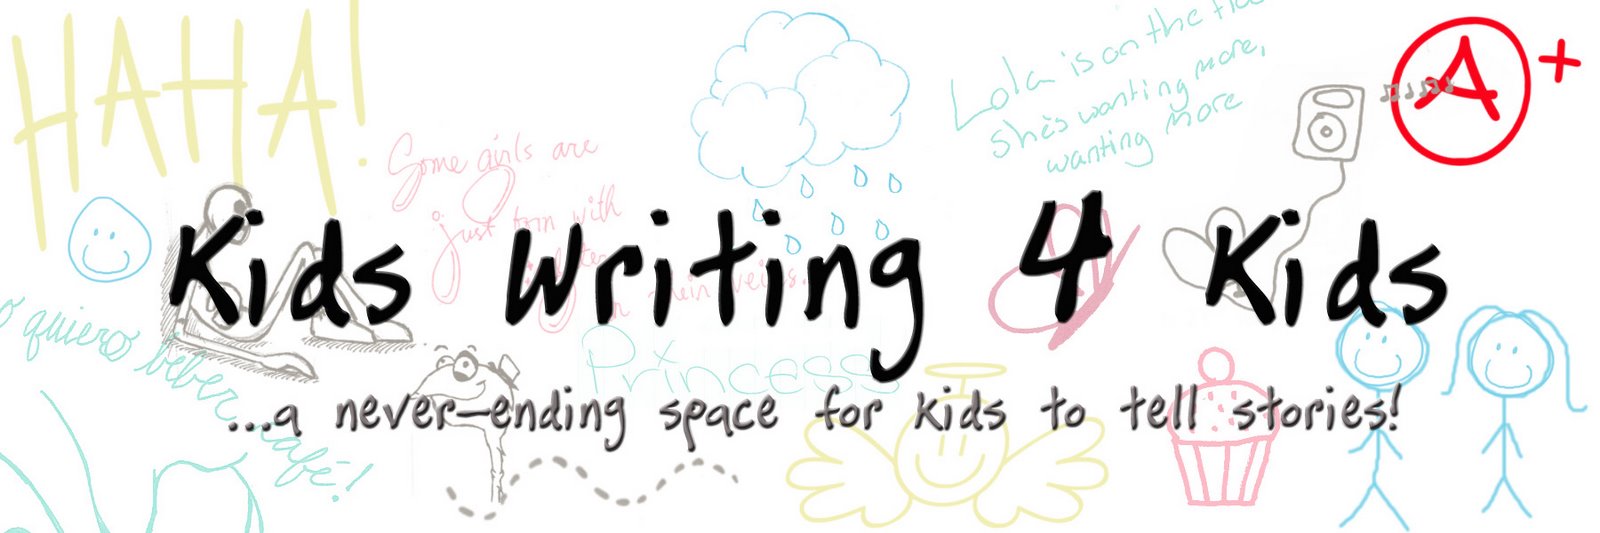 Kids Writing for Kids